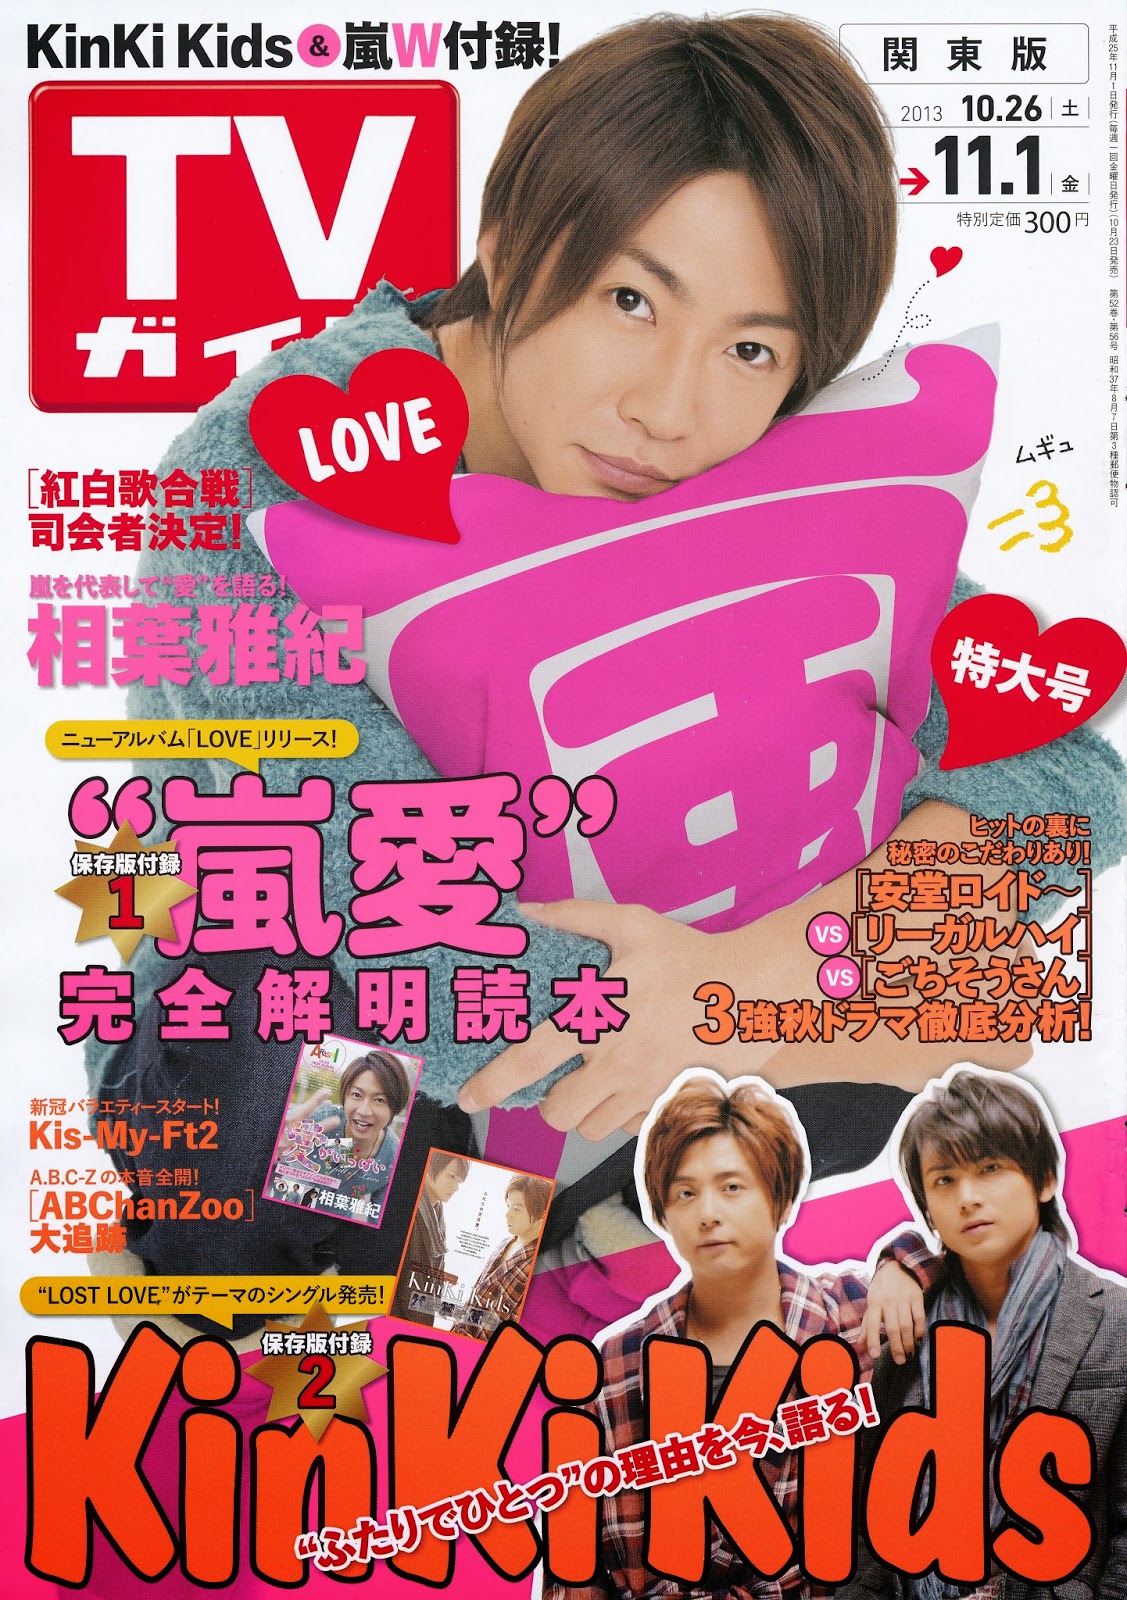 Arashi 3 Mandy S Blog Tv Guide 13年11月1日號